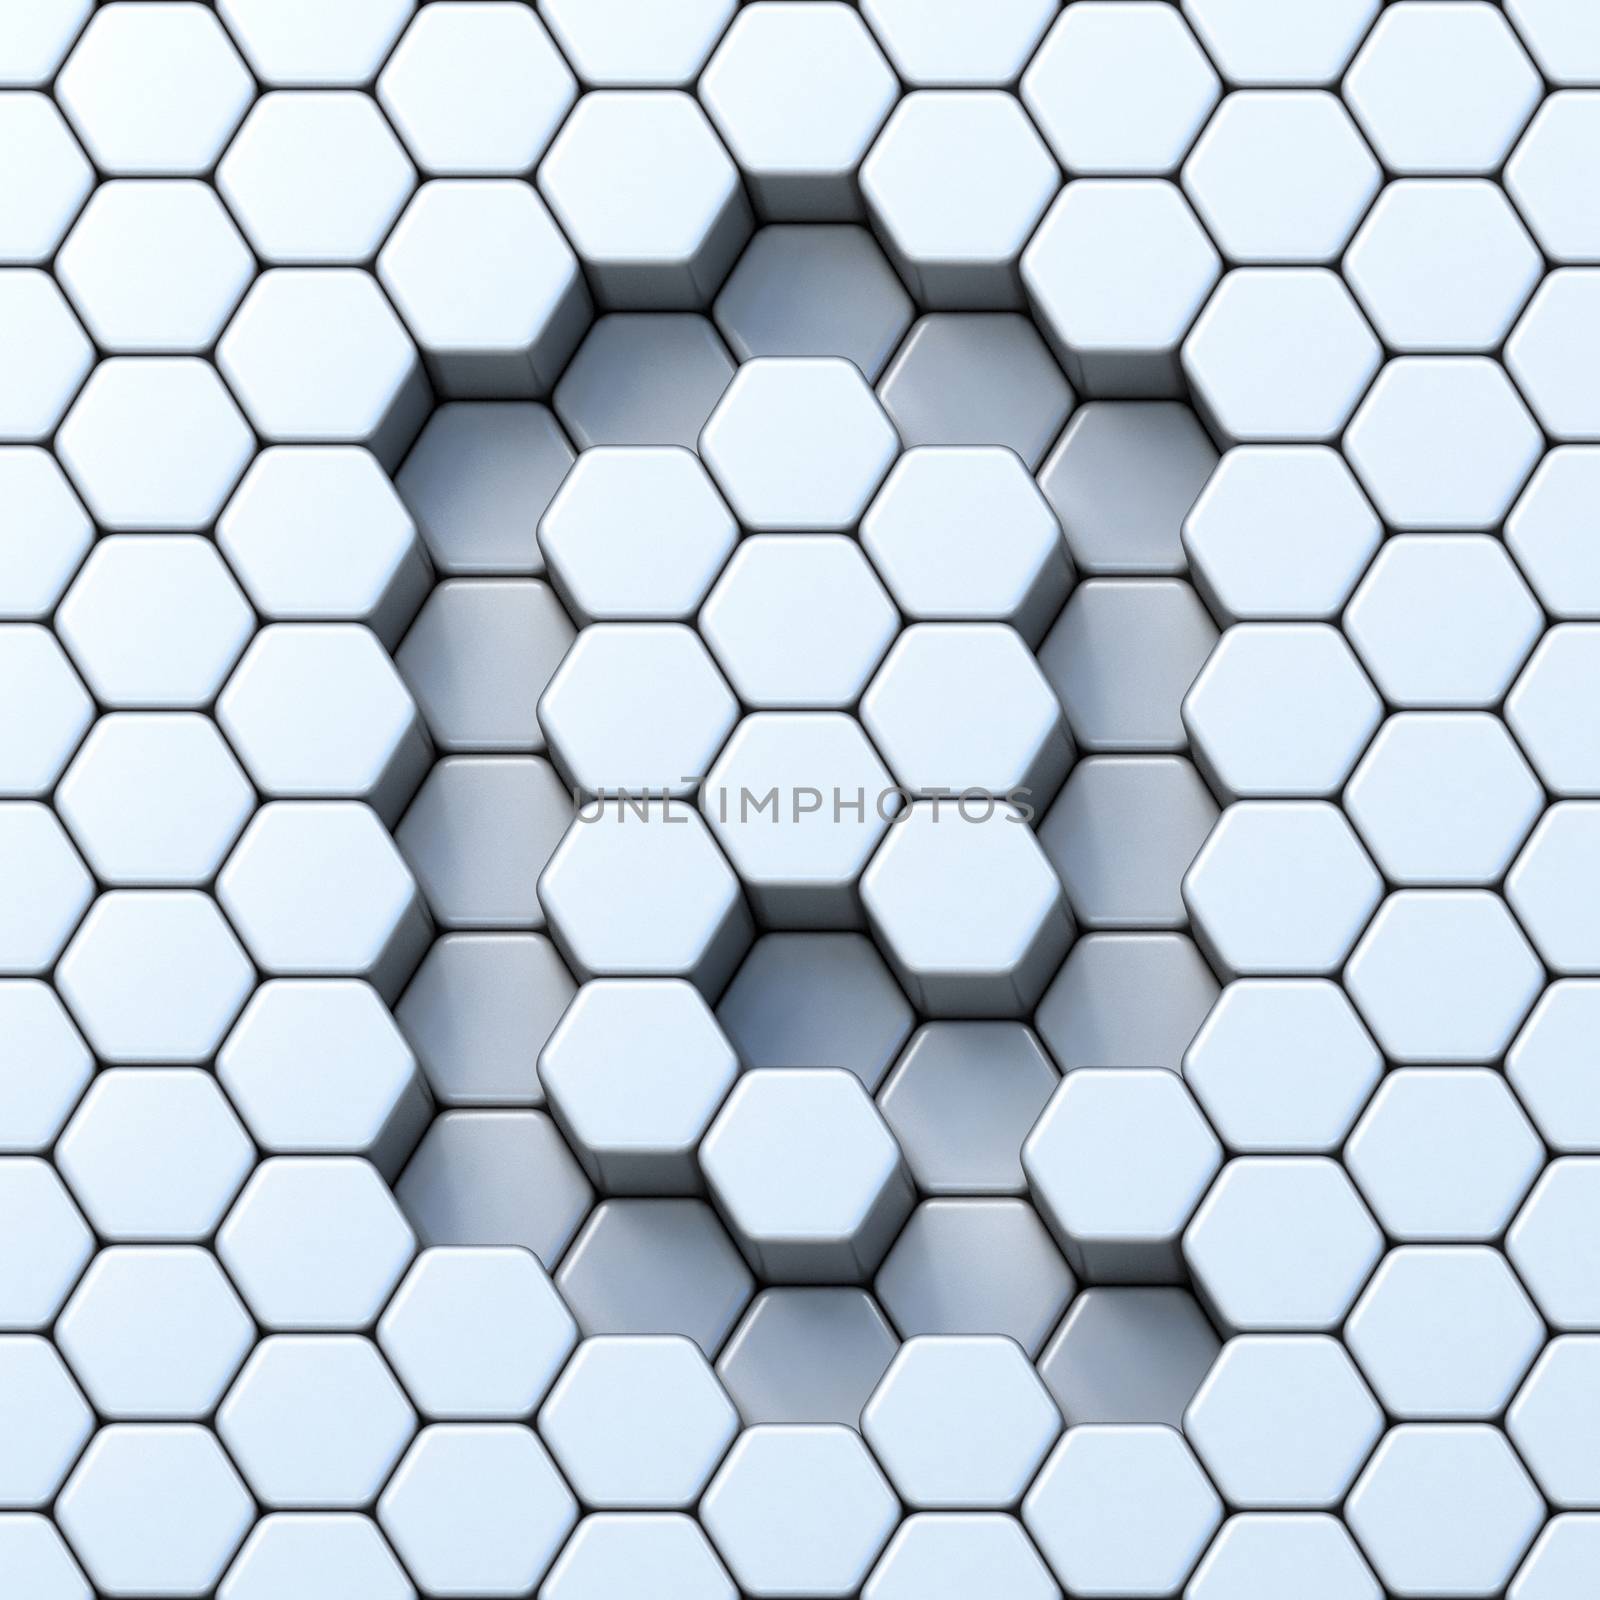 Hexagonal grid letter Q 3D by djmilic